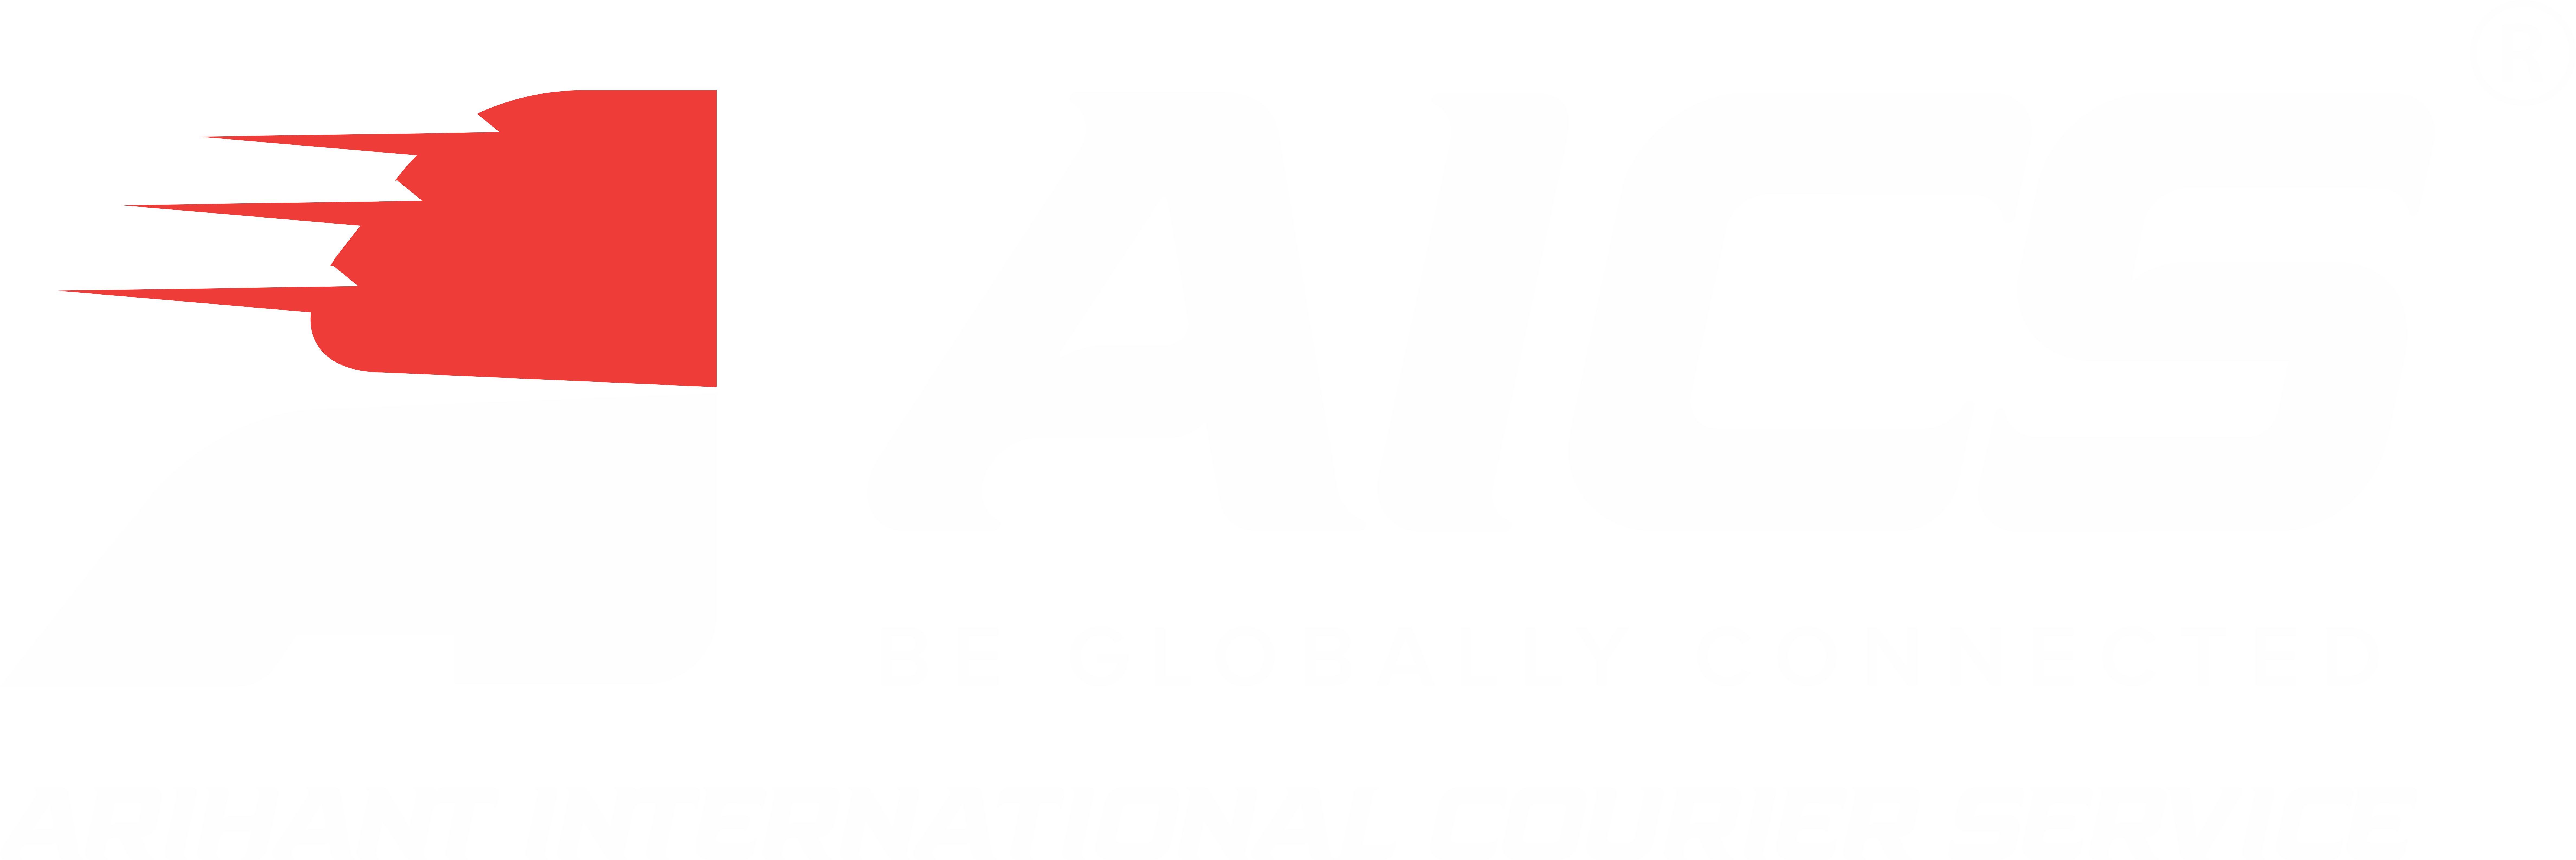 Arihant International logo f